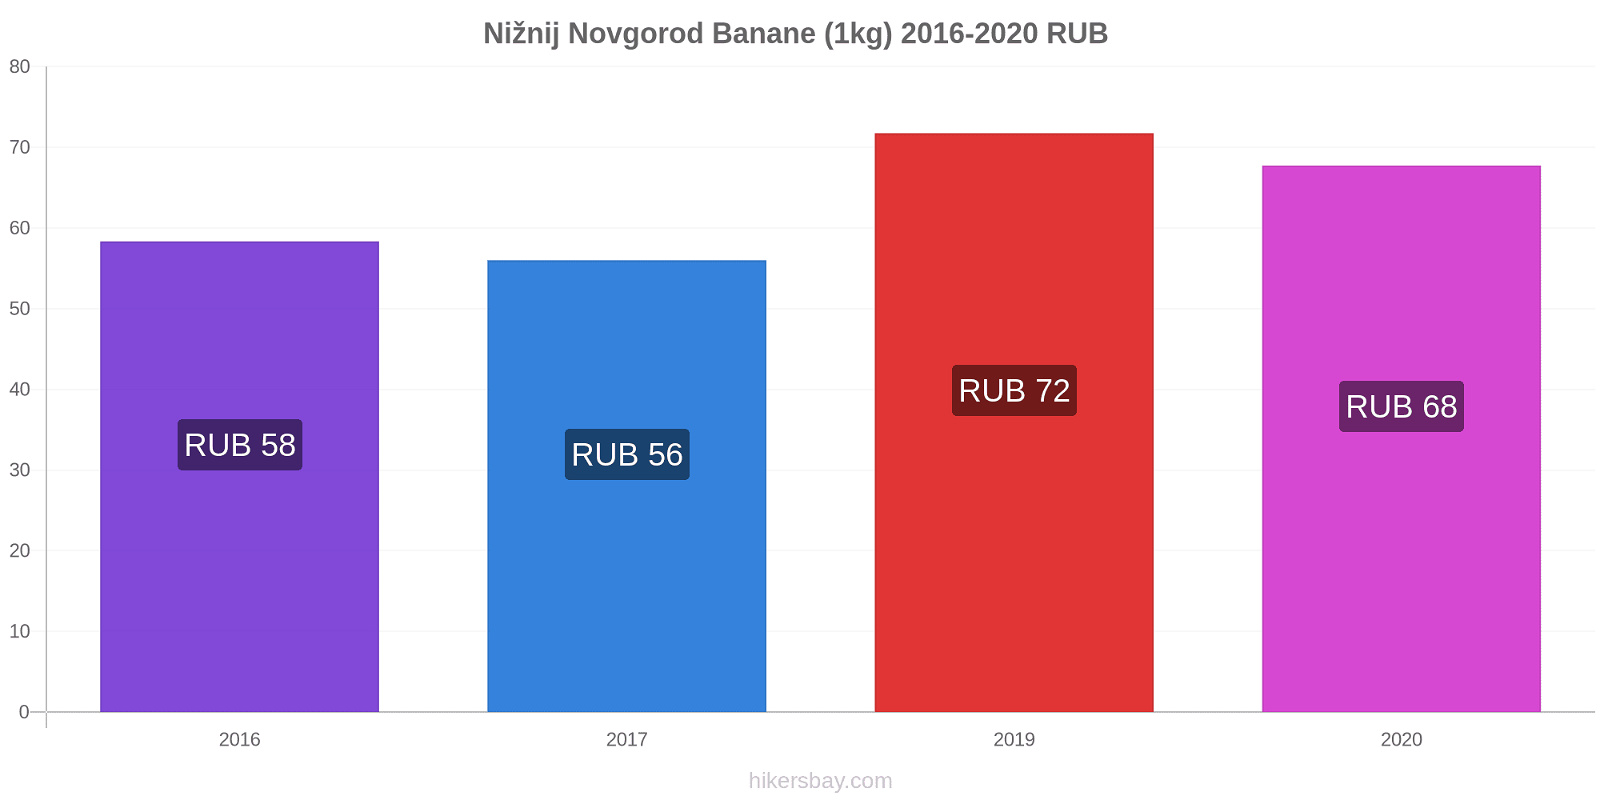 Nižnij Novgorod variazioni di prezzo Banana (1kg) hikersbay.com